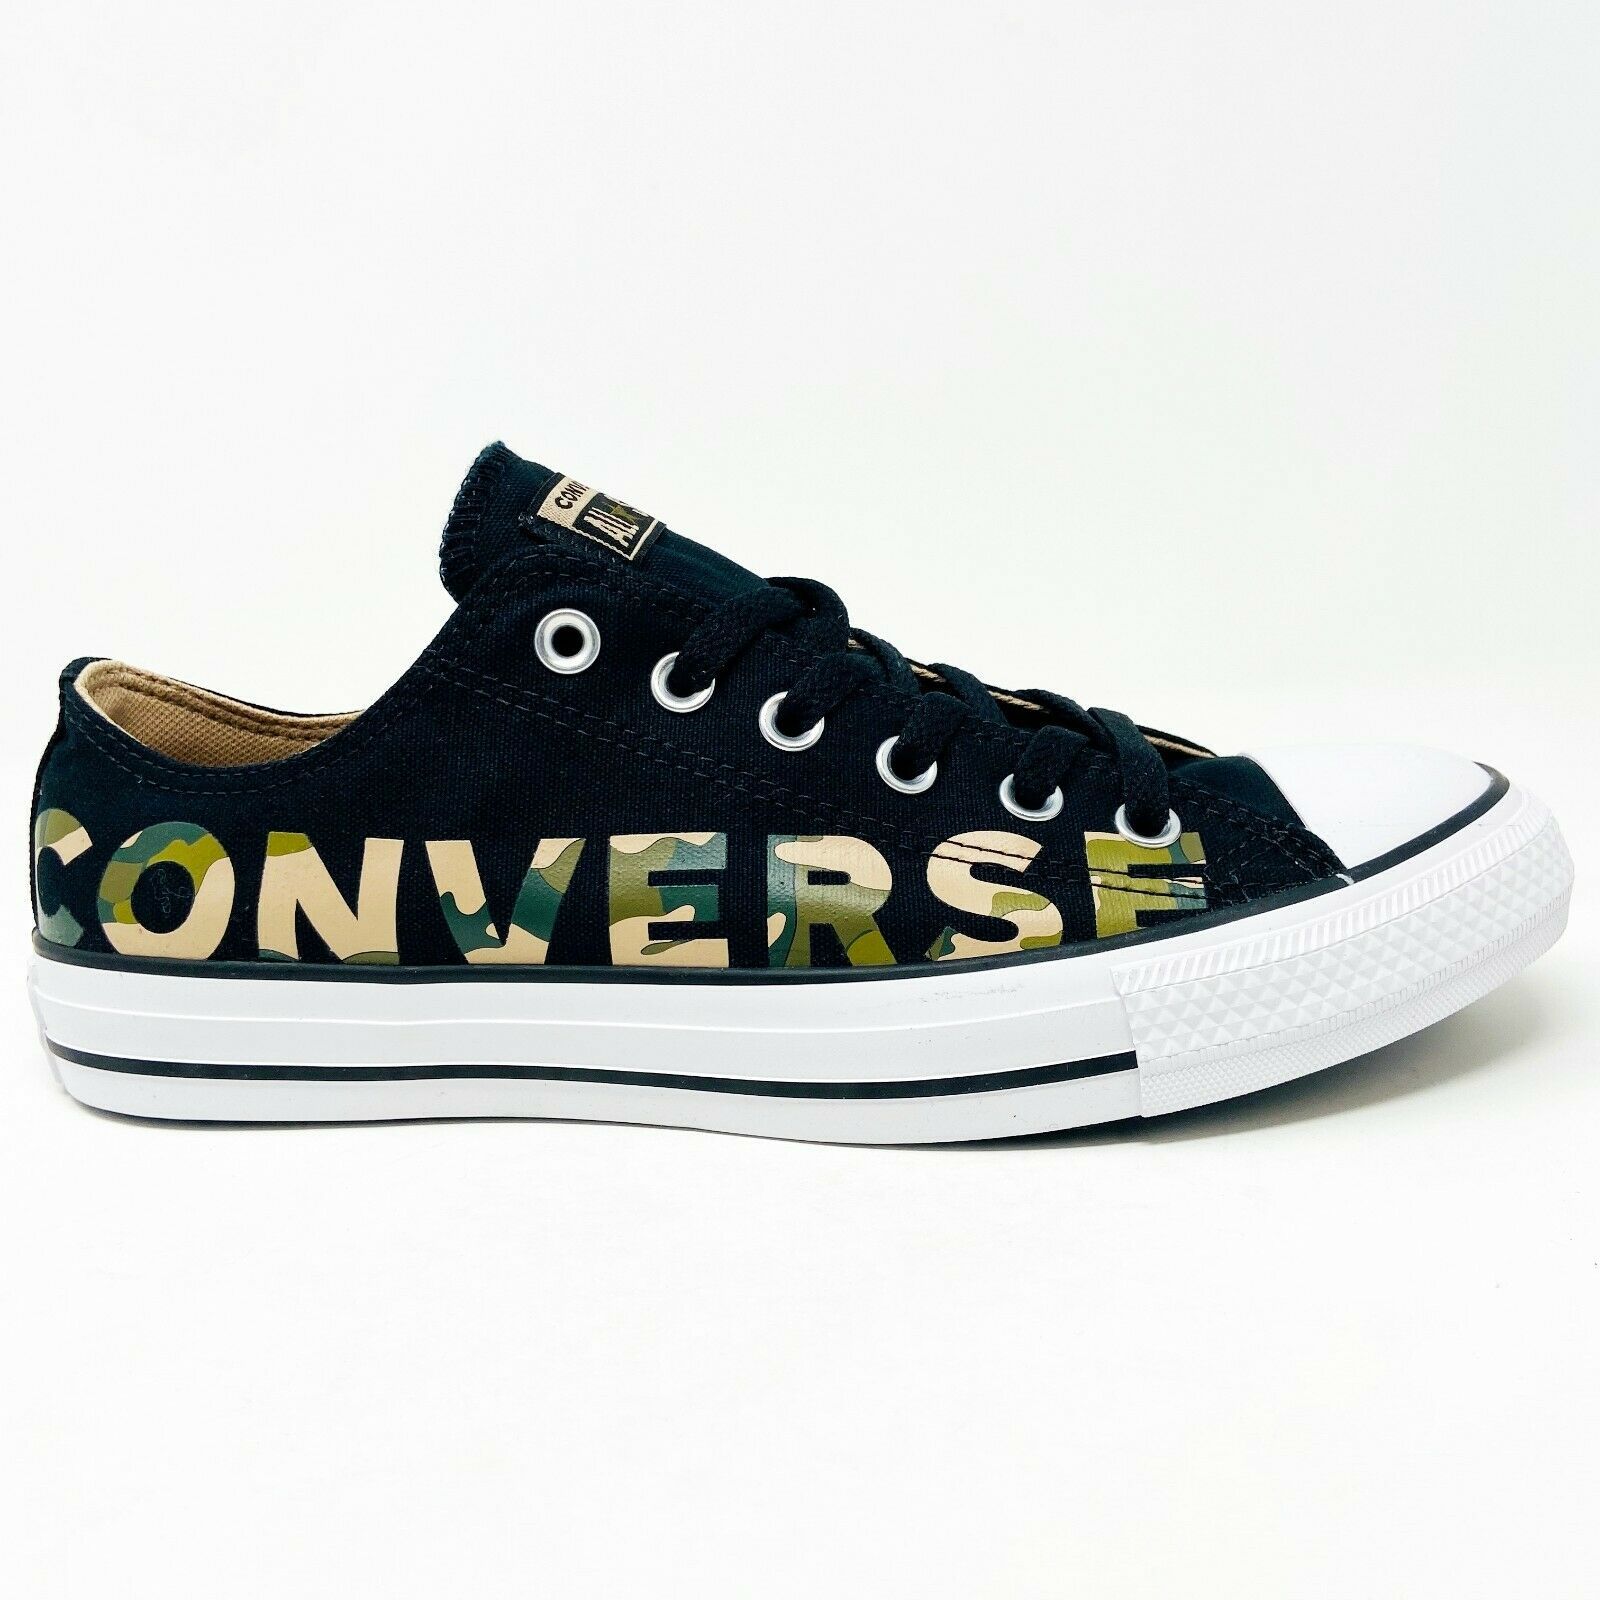 Converse Chuck Taylor All Star Ox Camo Black Logo Womens Sneakers 166234F